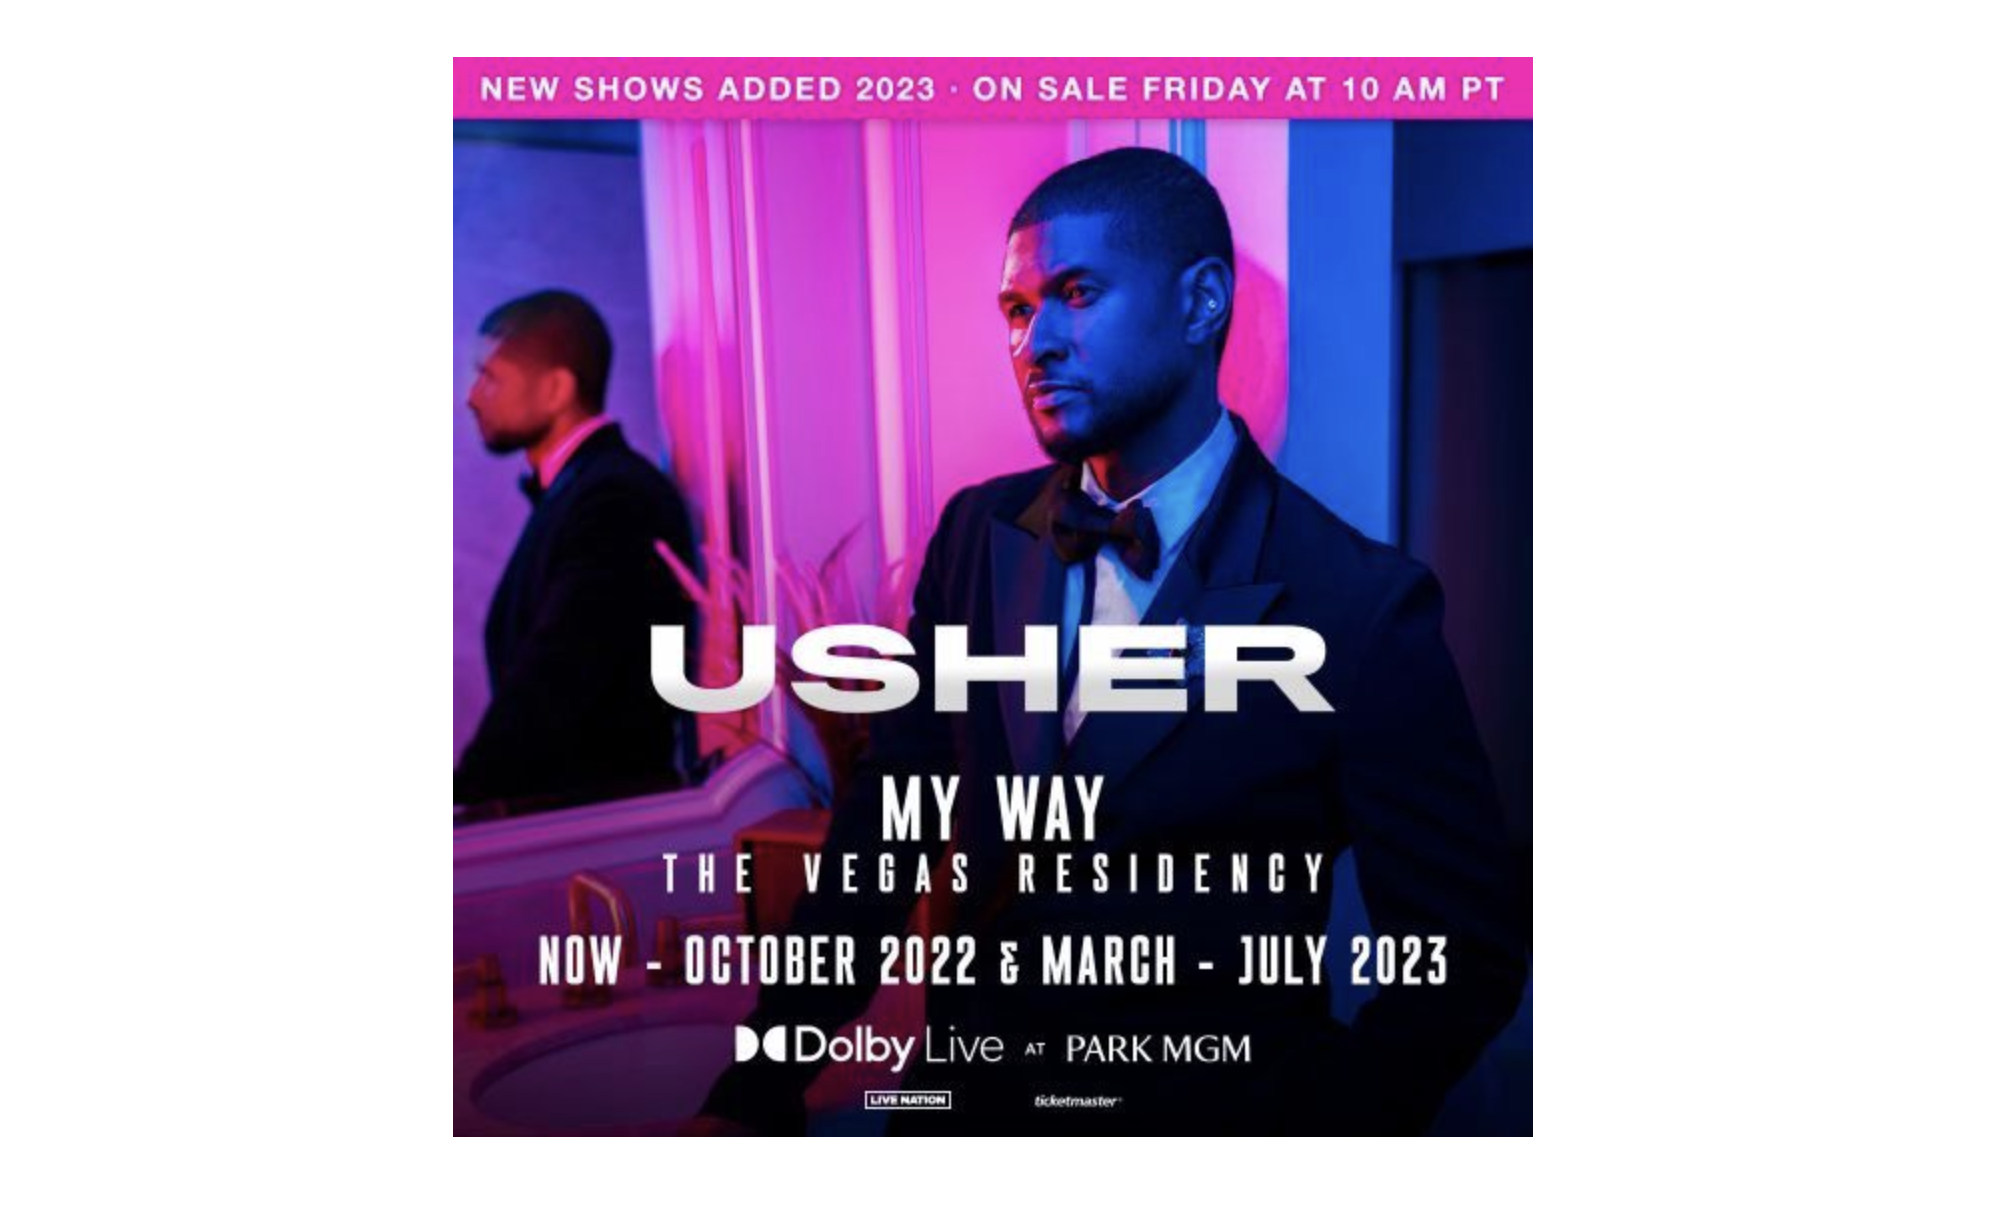 Usher Announces New Dates for Las Vegas Residency "Usher My Way The Vegas Residency" at Park